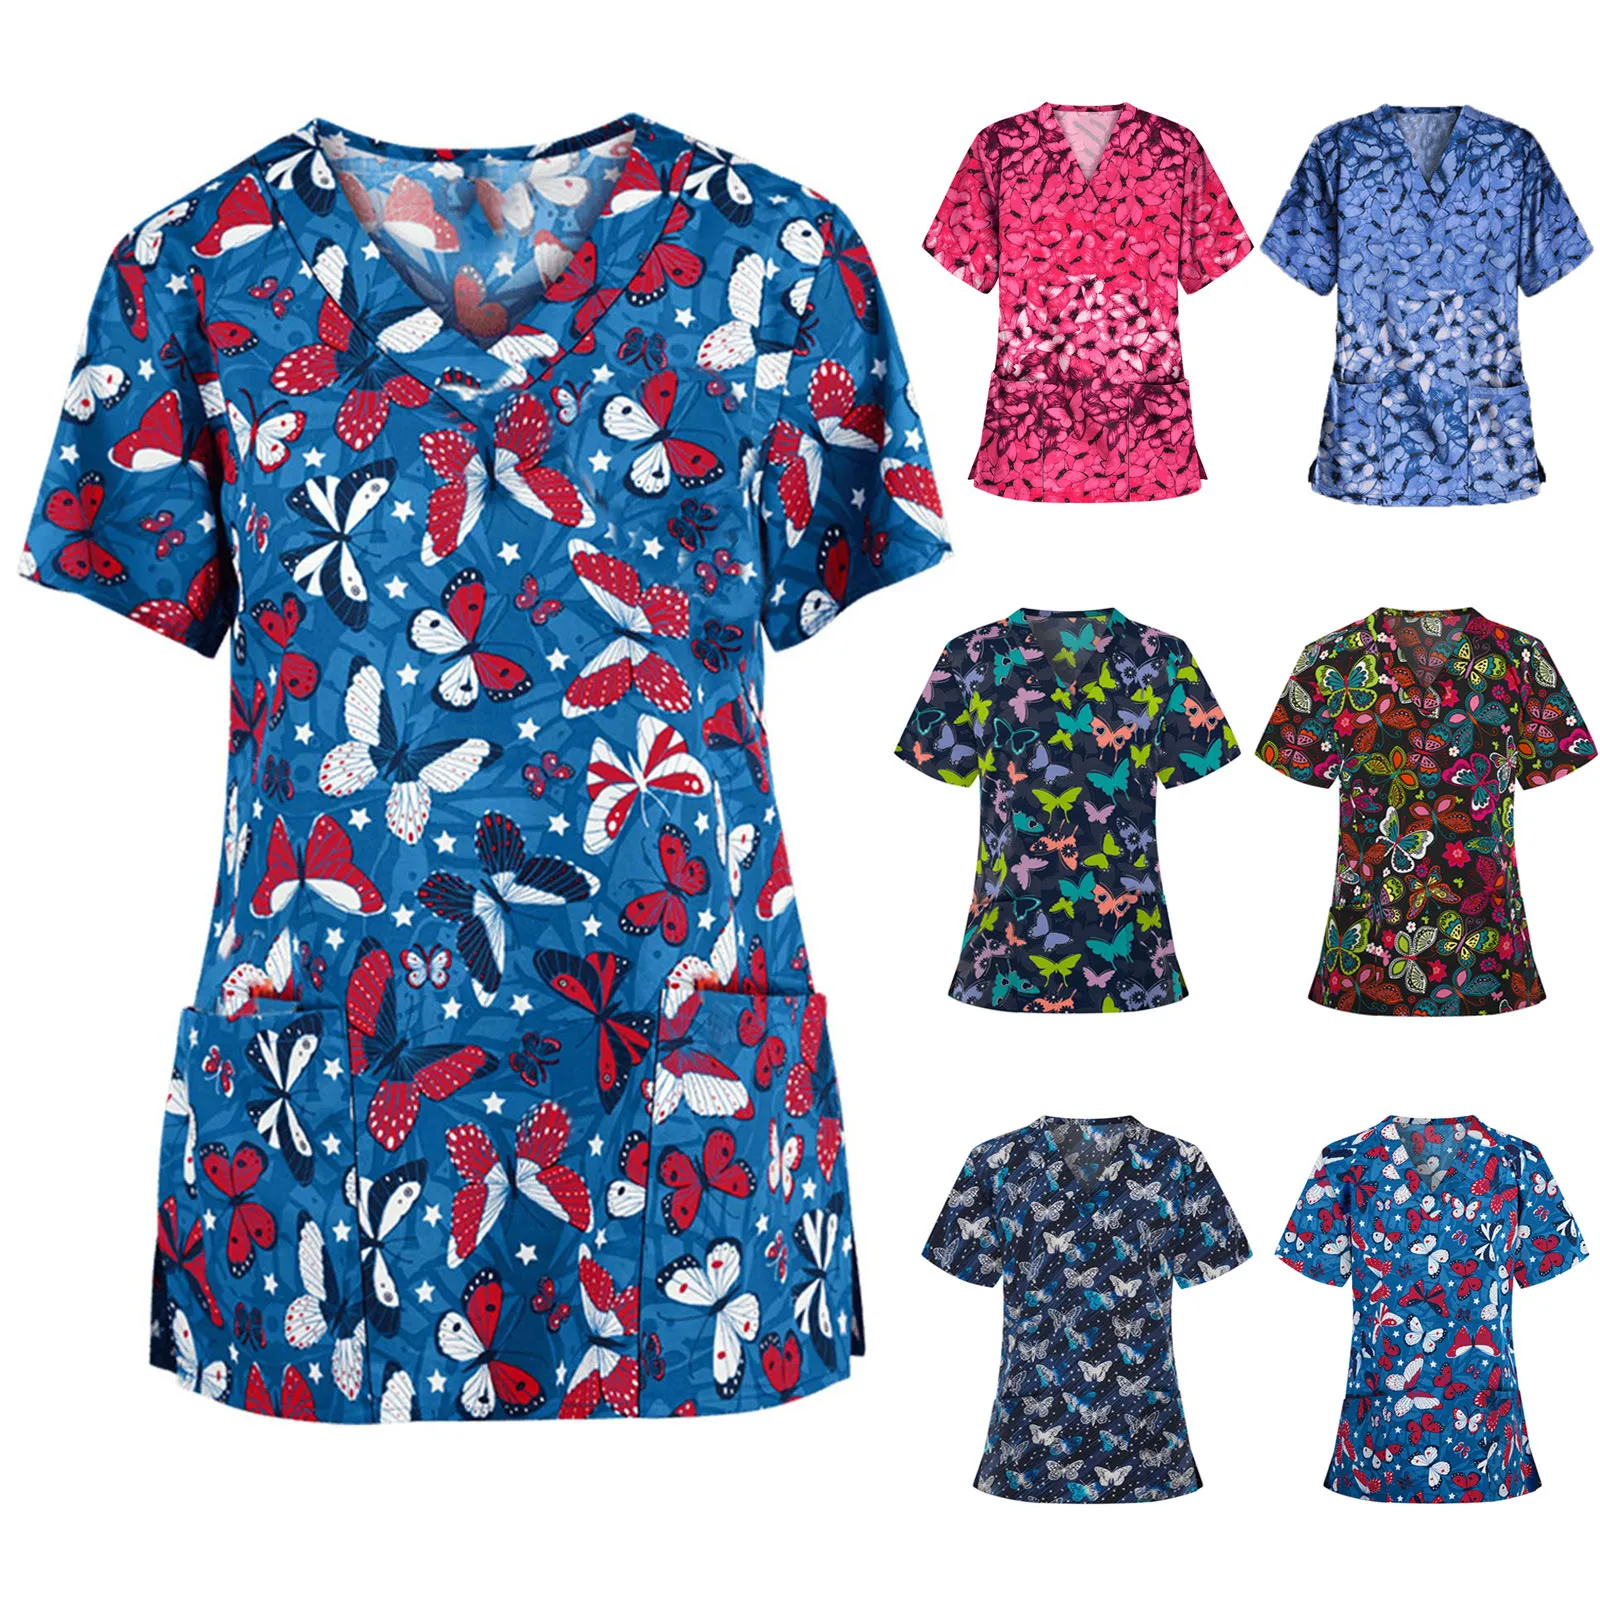 

Clinical Uniforms Woman Summer Working Nurse Blouse Short Sleeve V-neck Medicine Uniforms Tops Butterfly Printed Nursing Clothes